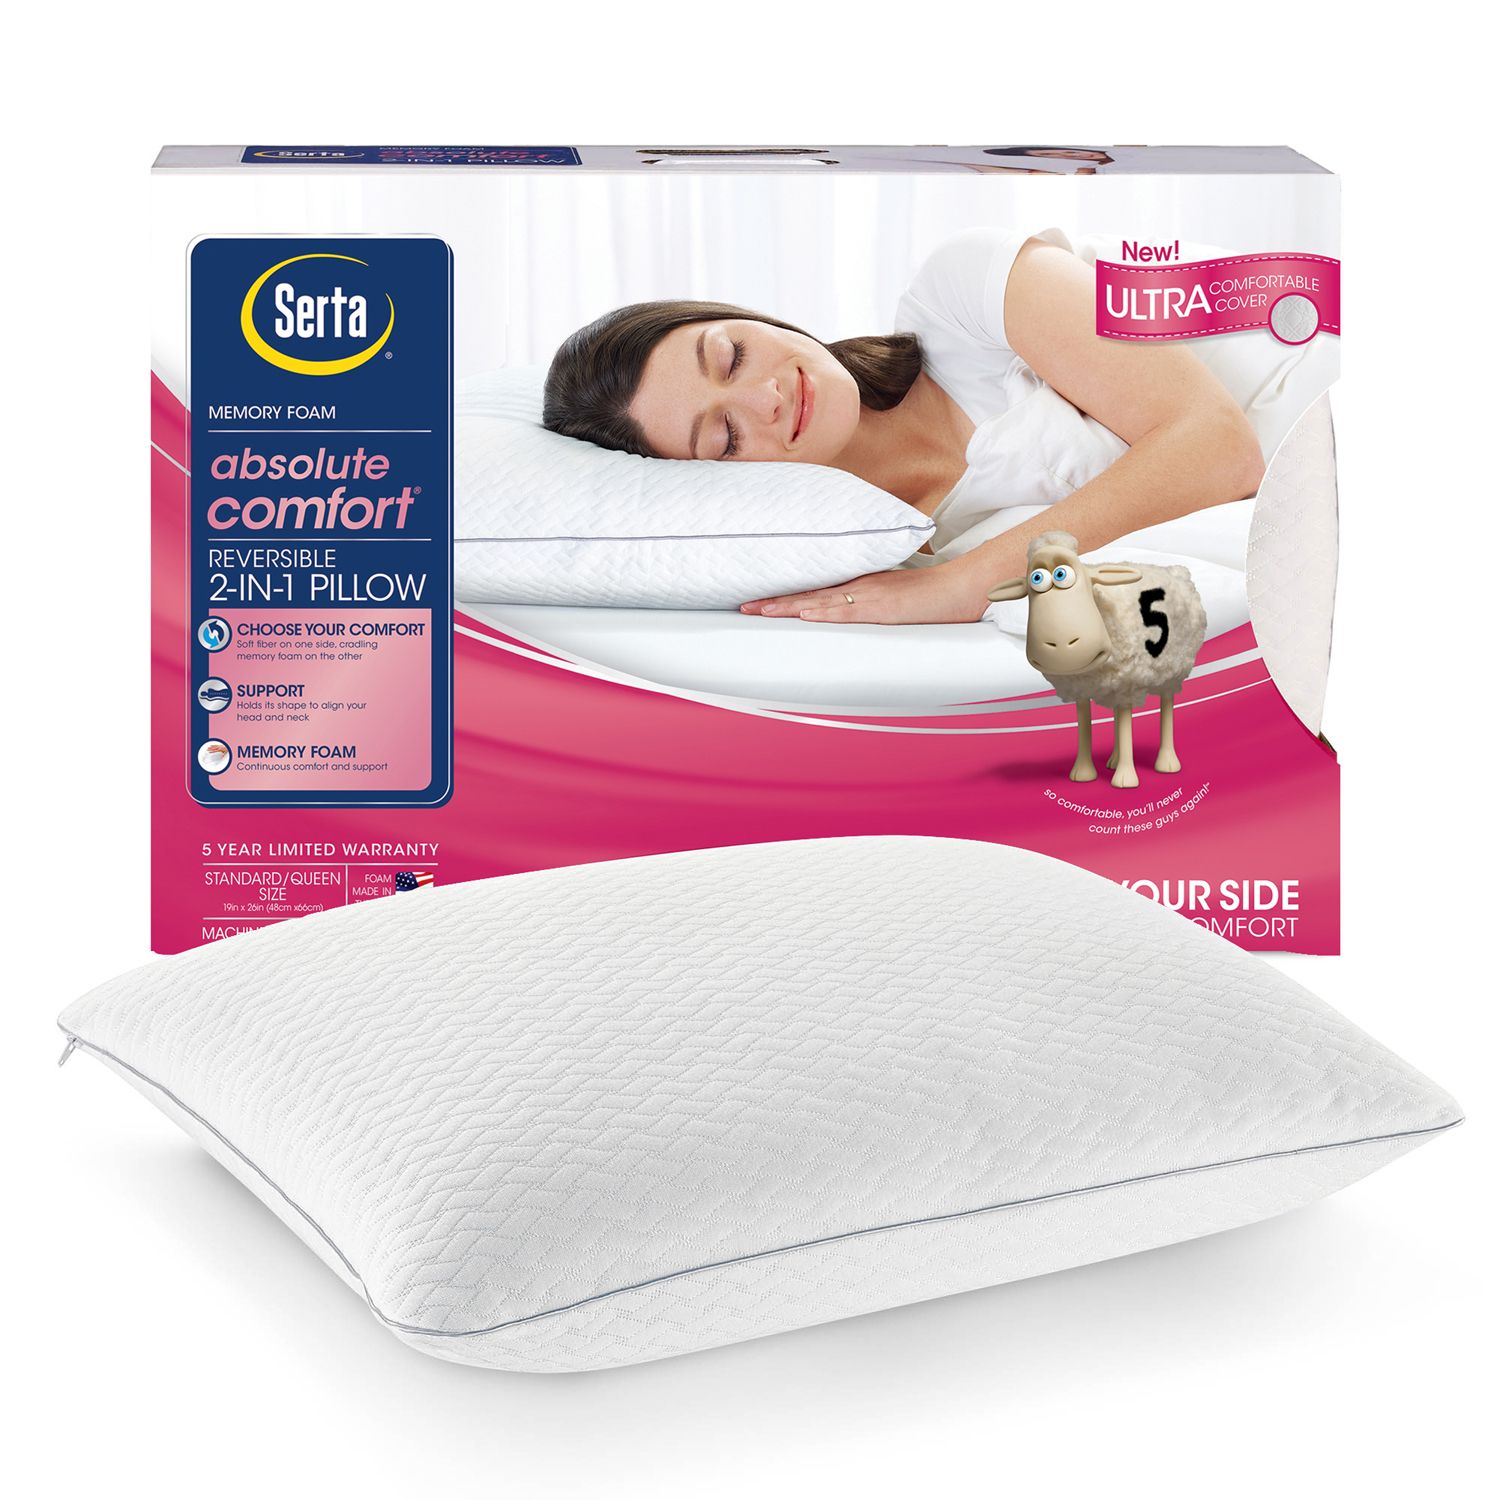 Serta® Absolute Comfort 2-in-1 Pillow